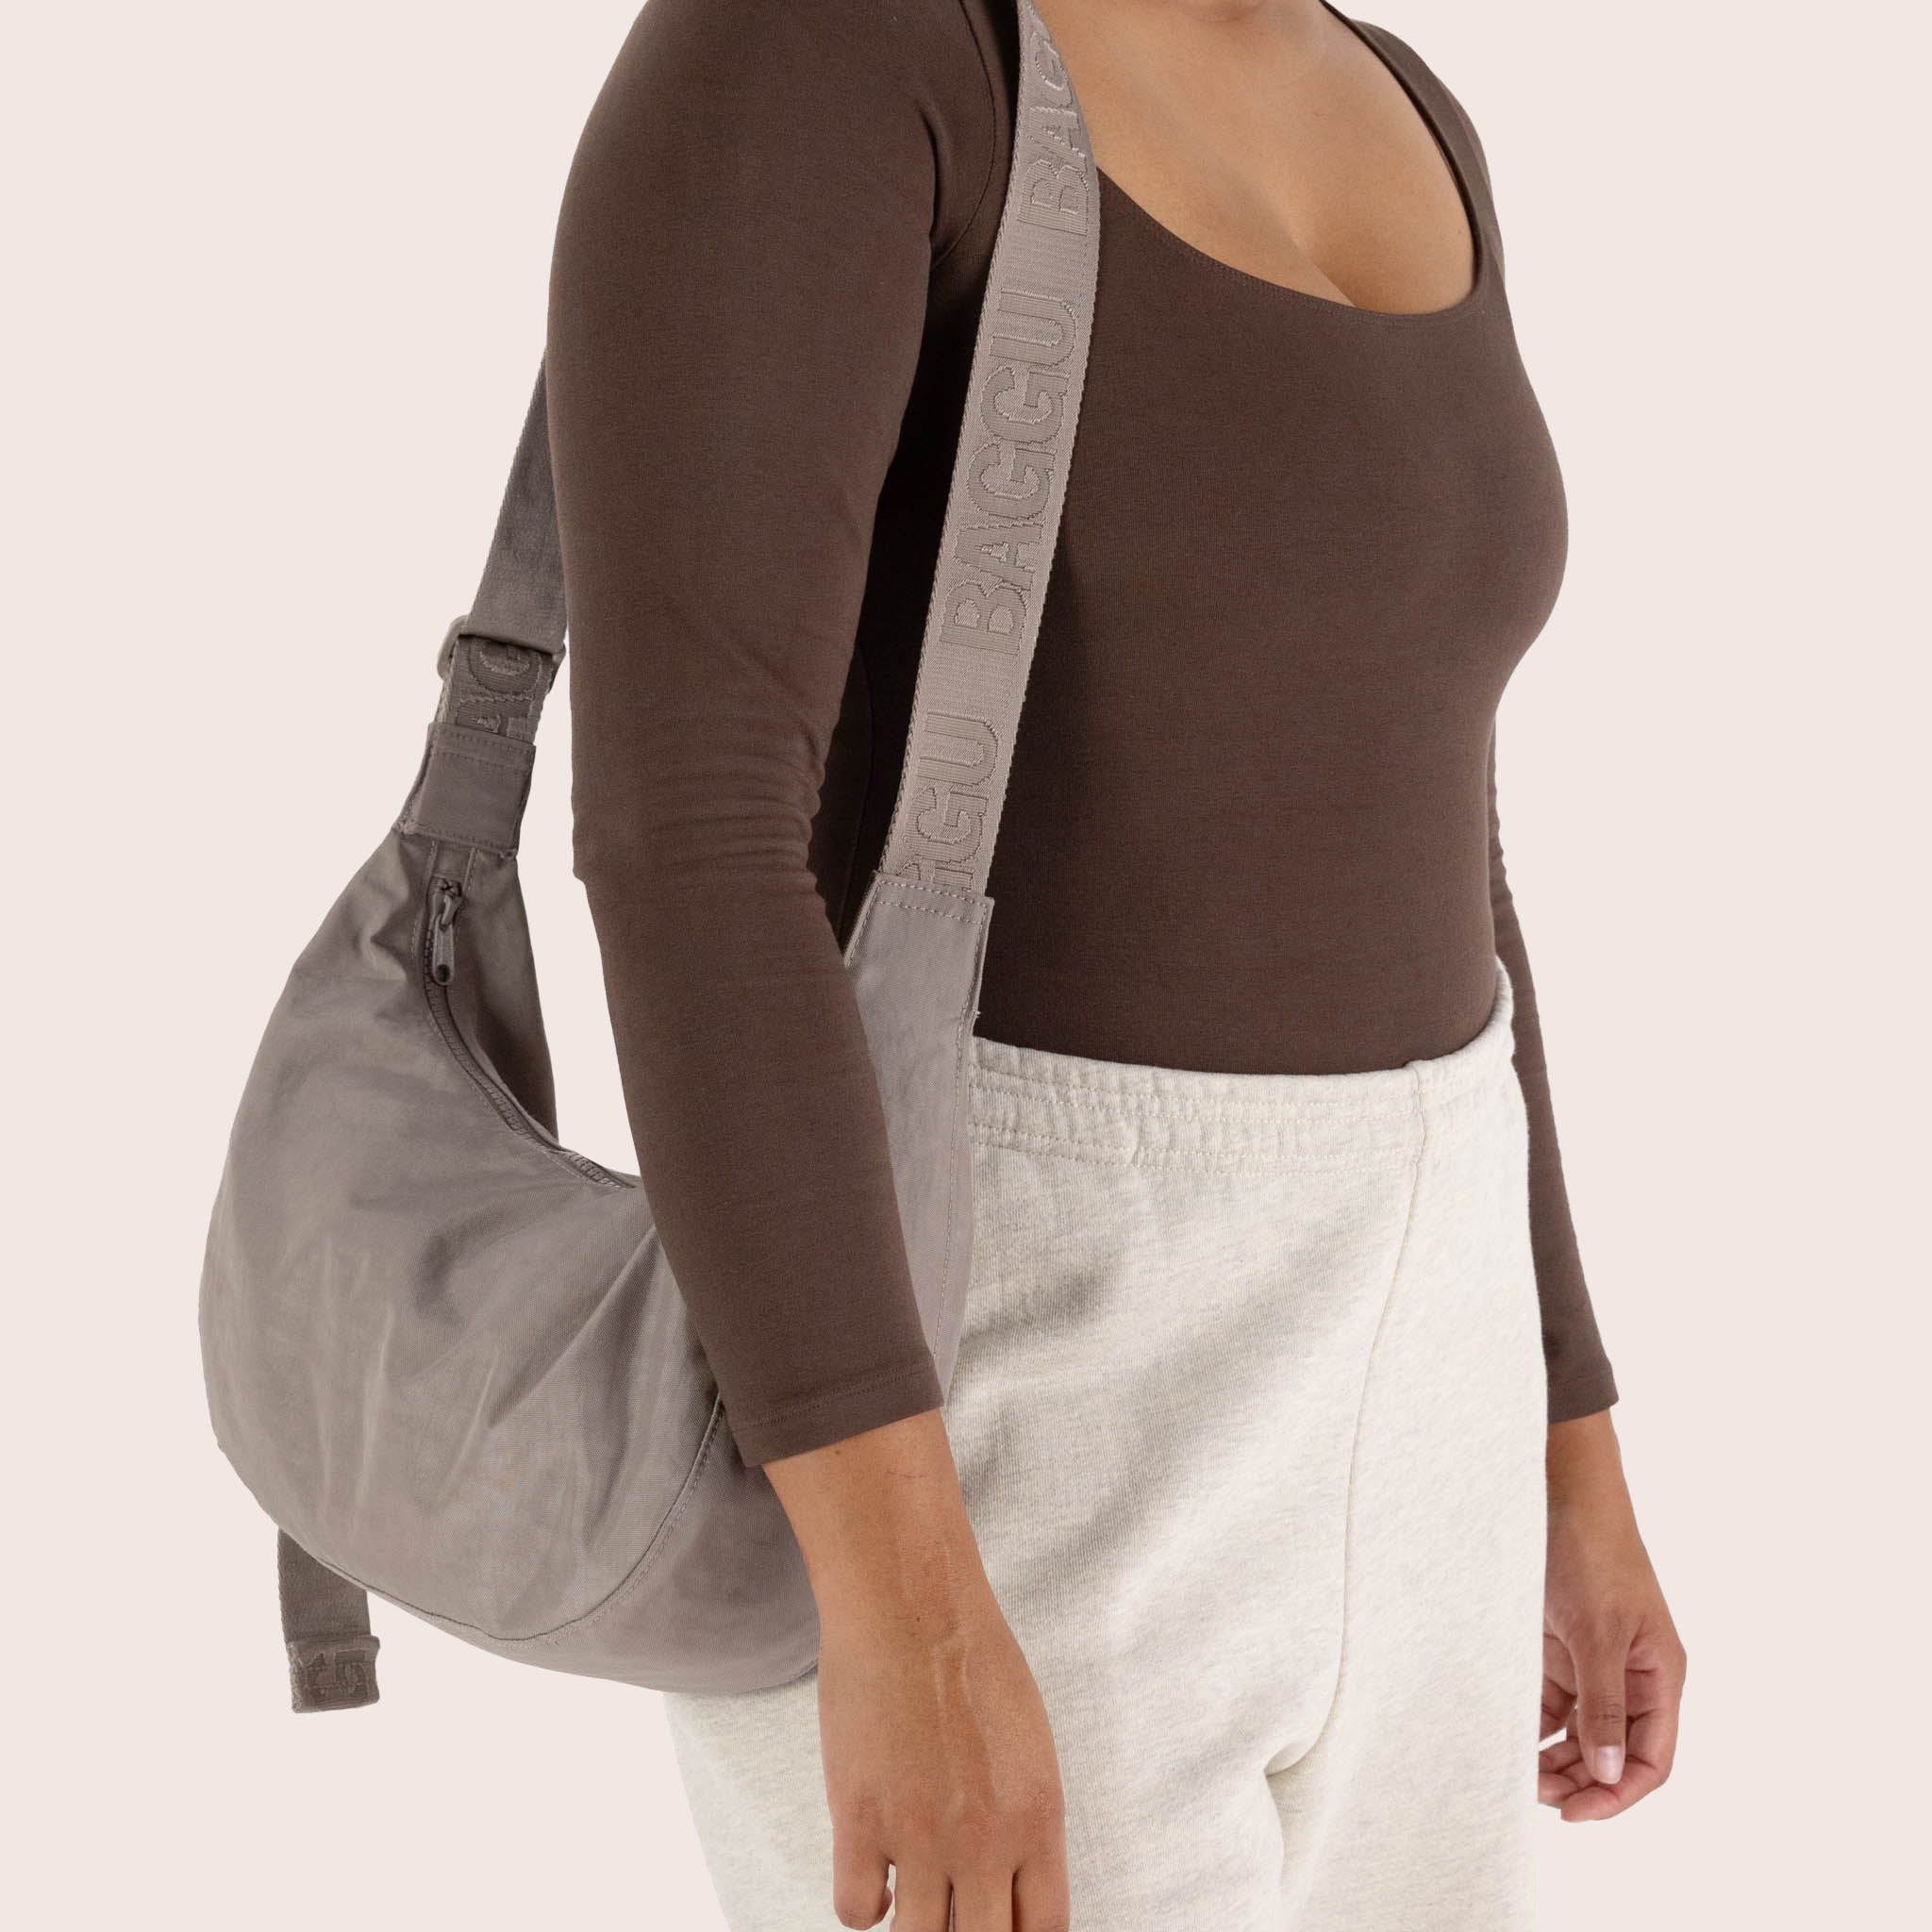 A crescent shaped nylon handbag with a shoulder strap.